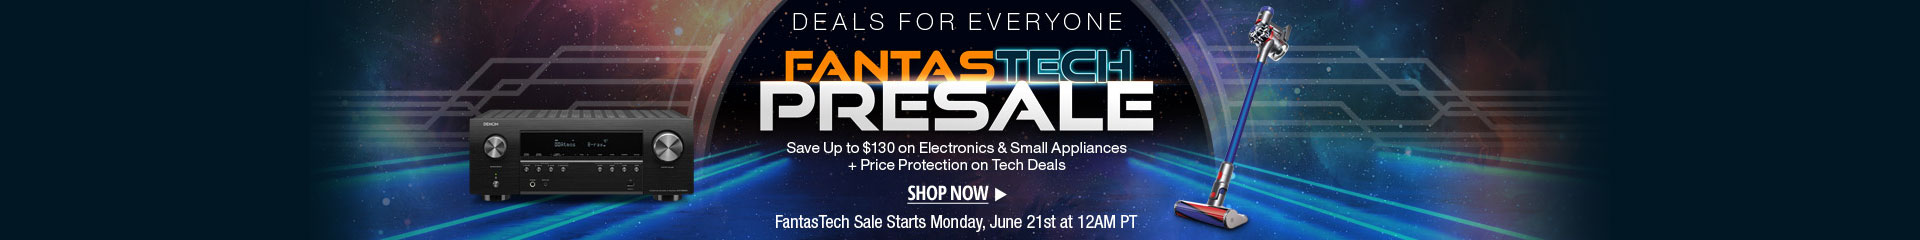 Deals for everyone - FantasTech Presale